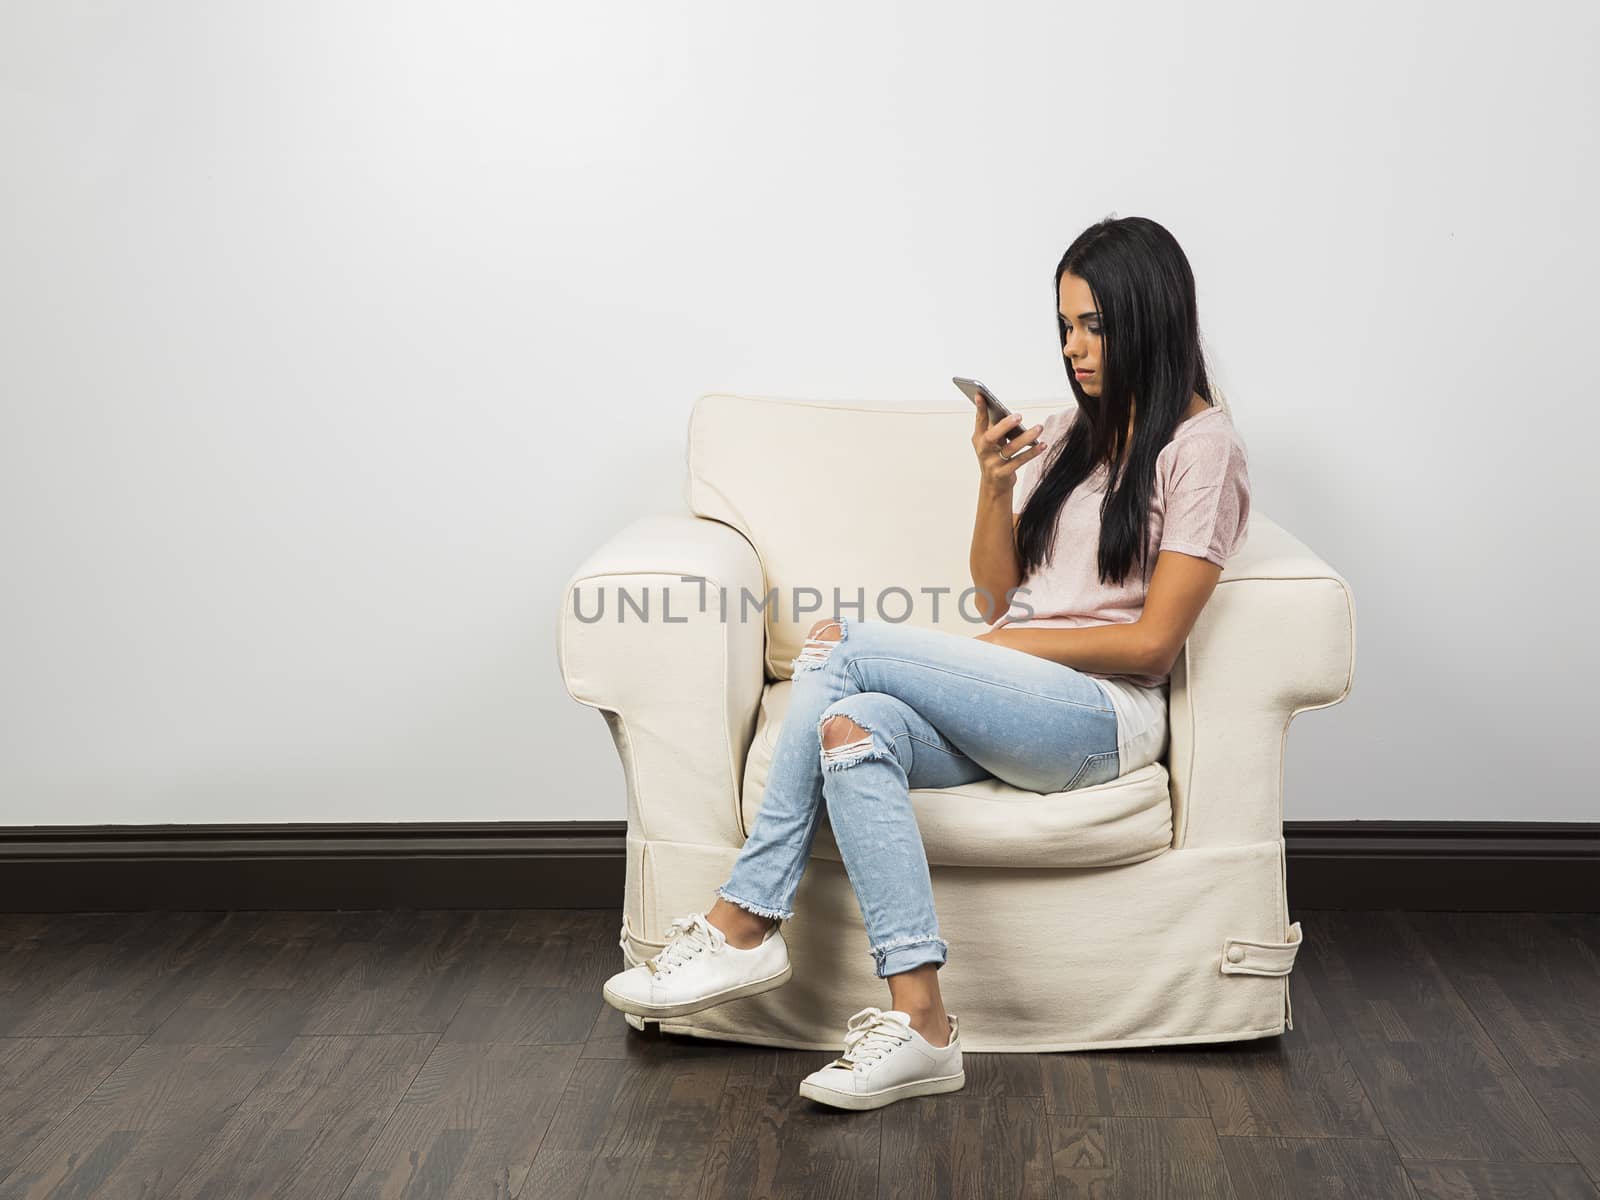 Millennial on her phone by mypstudio